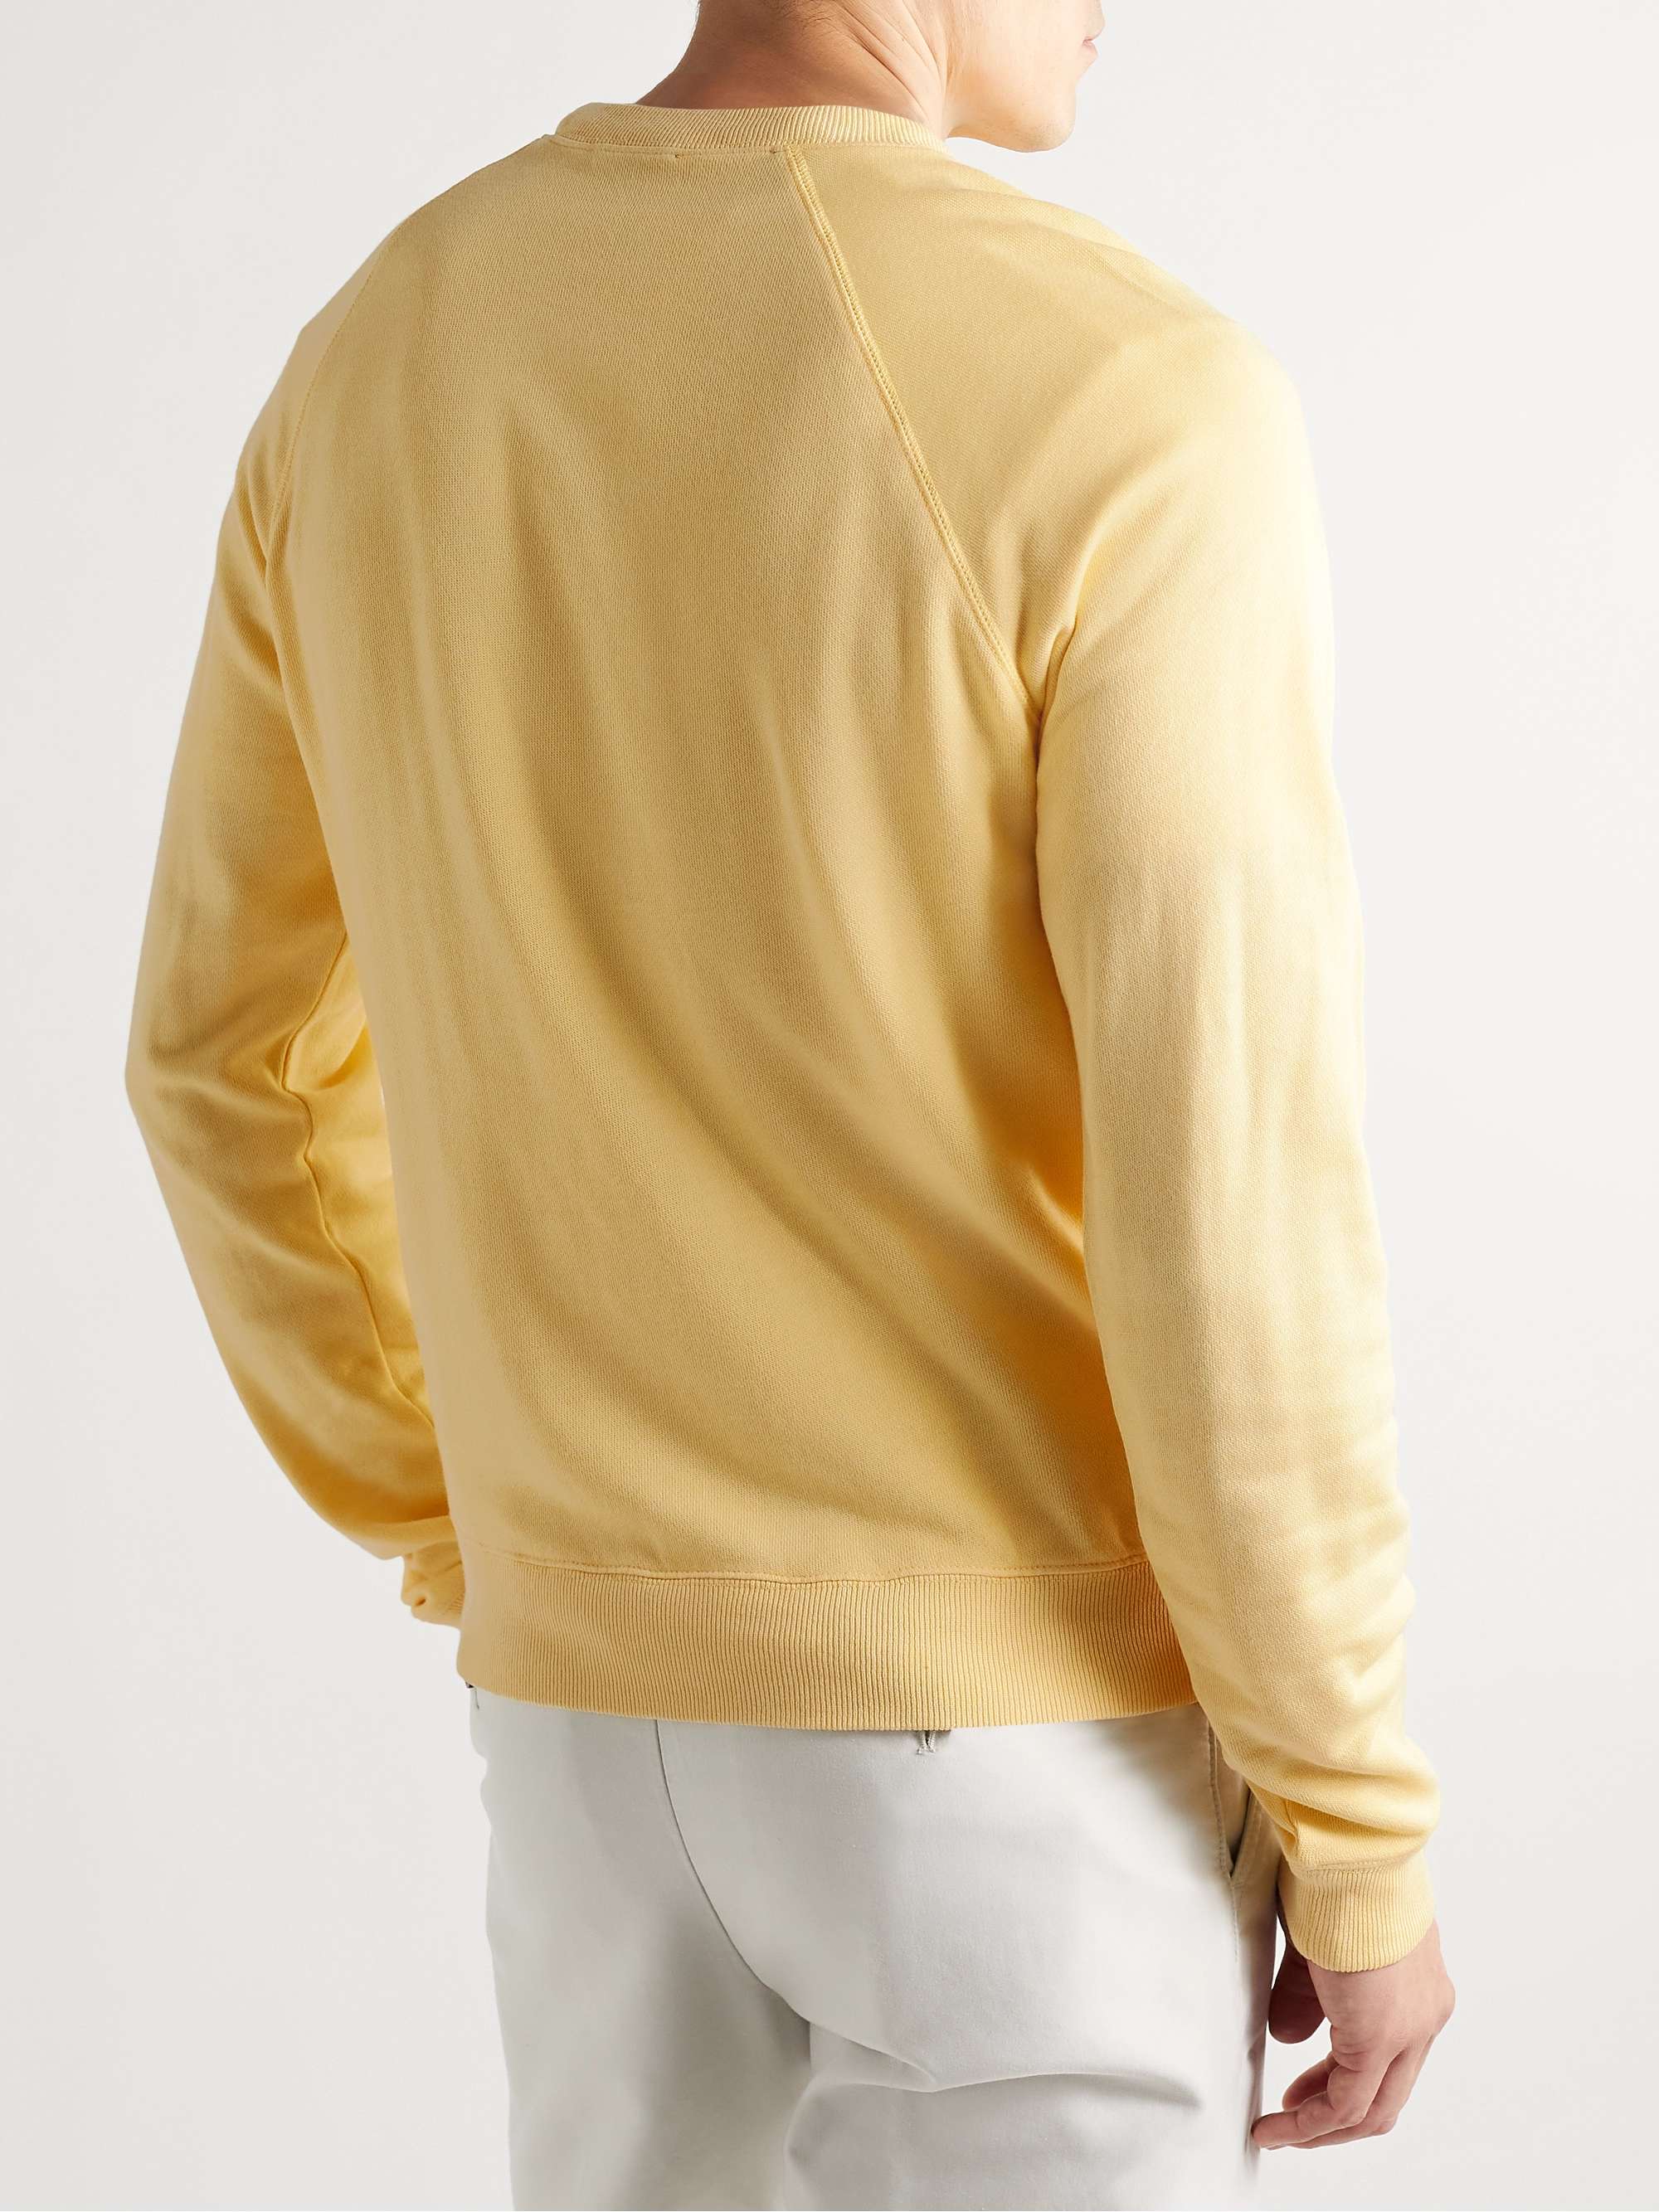 TOM FORD Cotton-Blend Jersey Sweatshirt